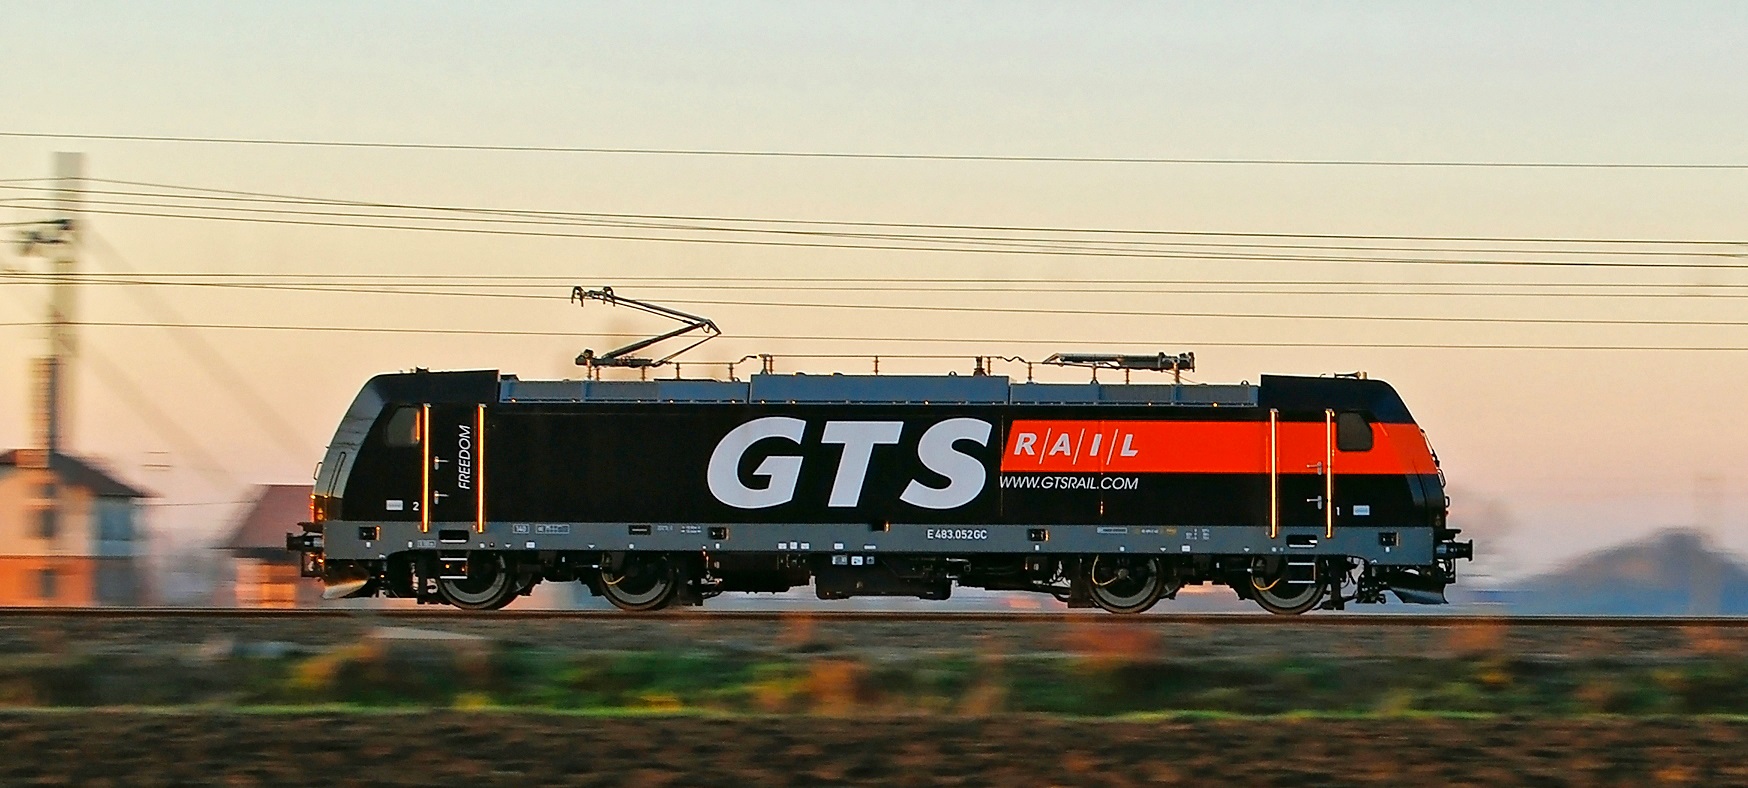 Logistica: altre 5 locomotive per Gts Rail. Superati i 17 mln di investimenti